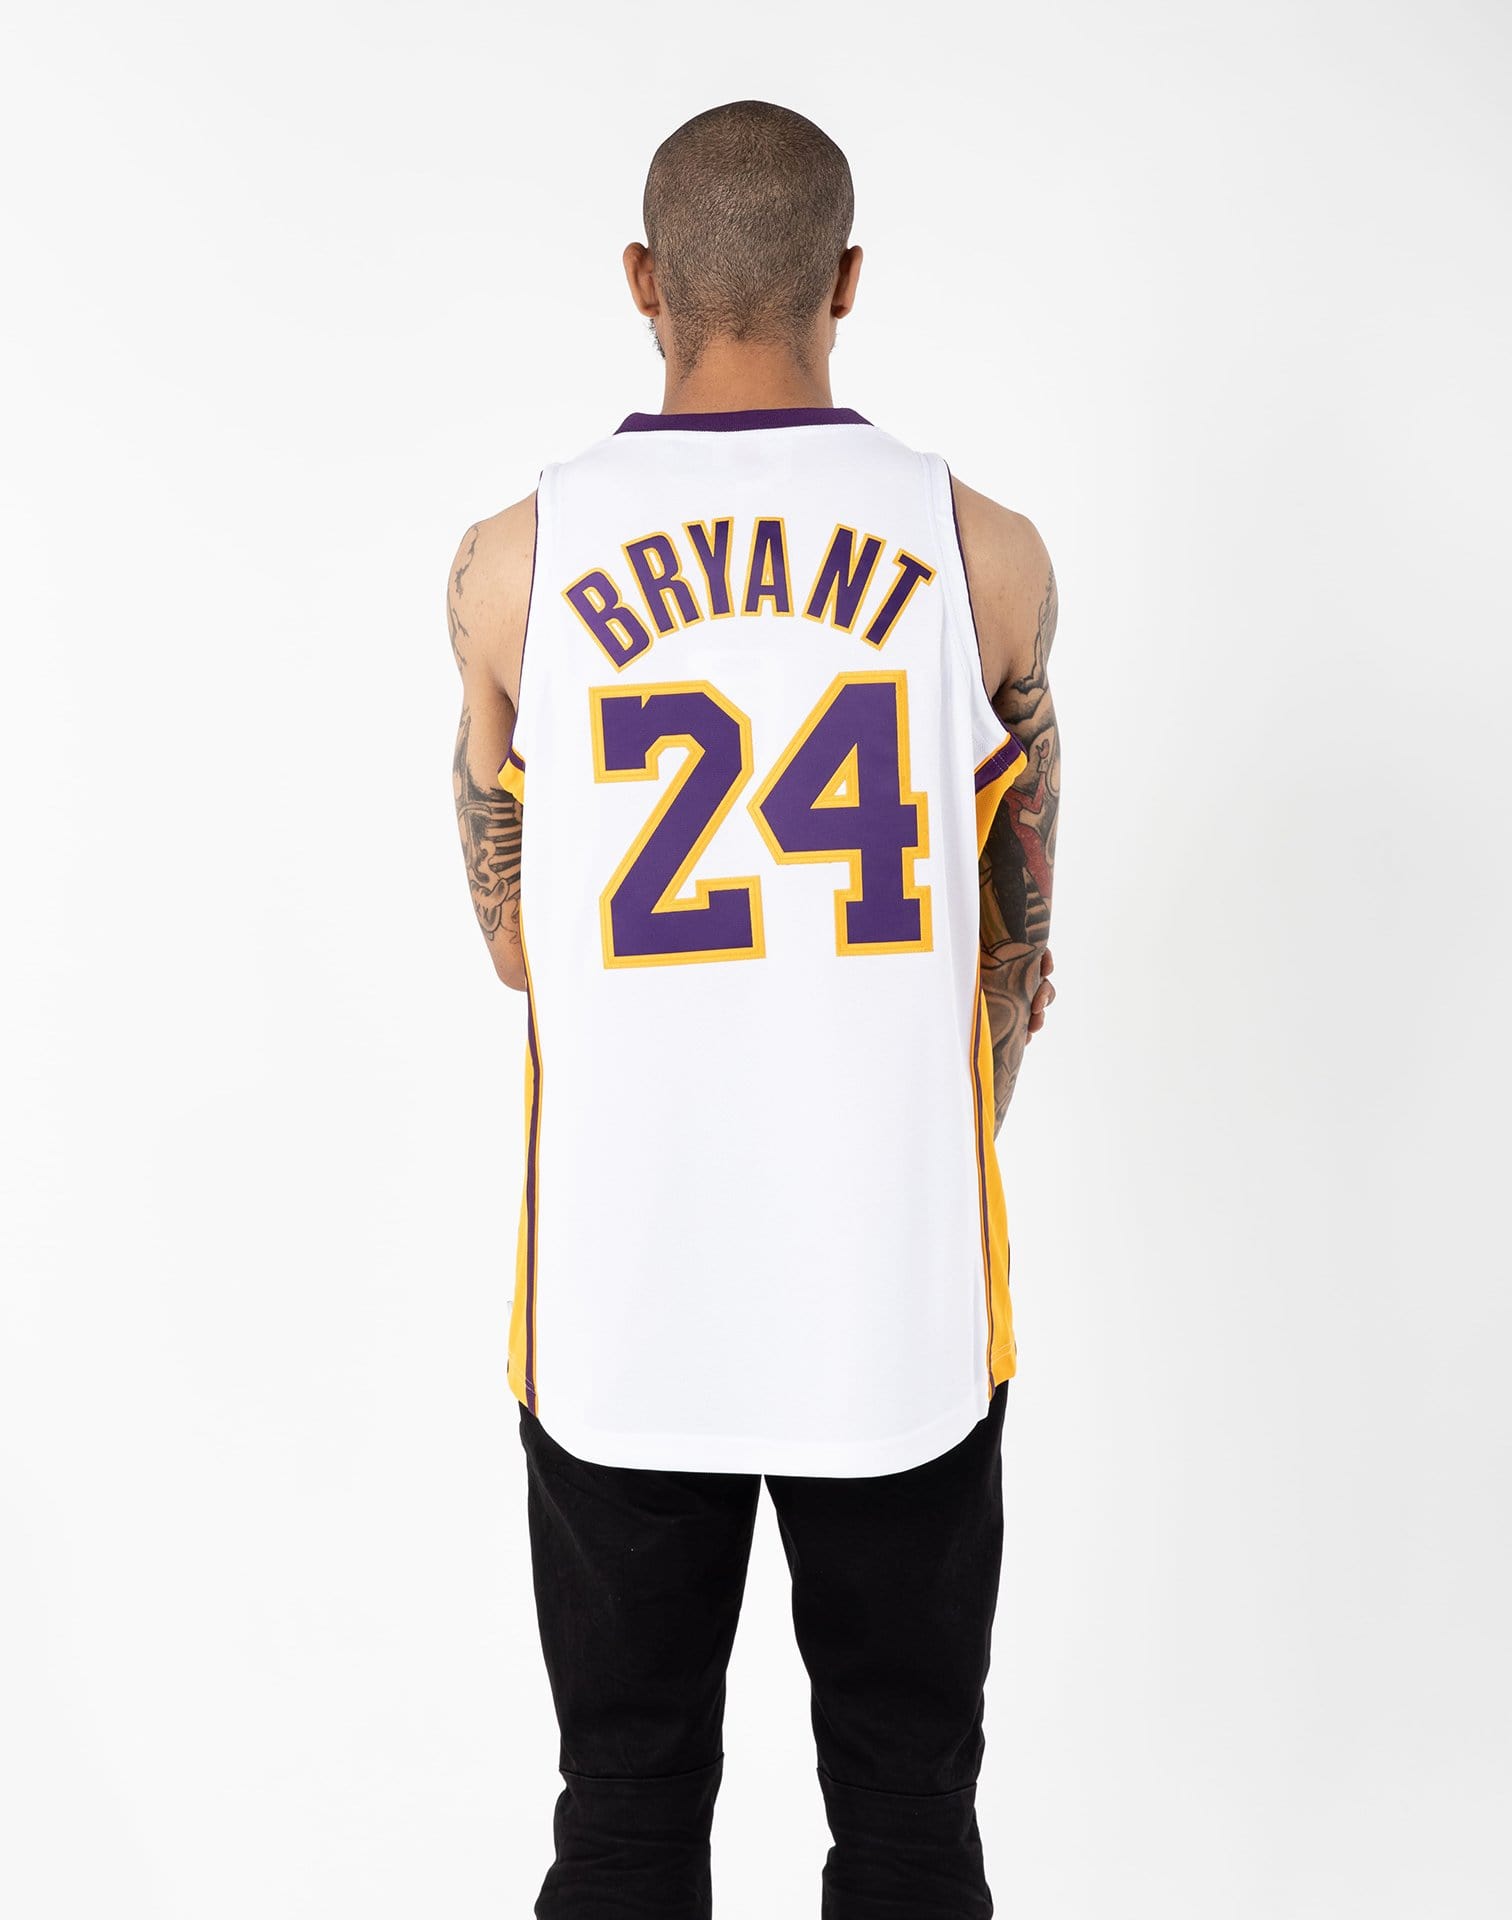 Kobe Bryant 09-10 White Lakers Authentic